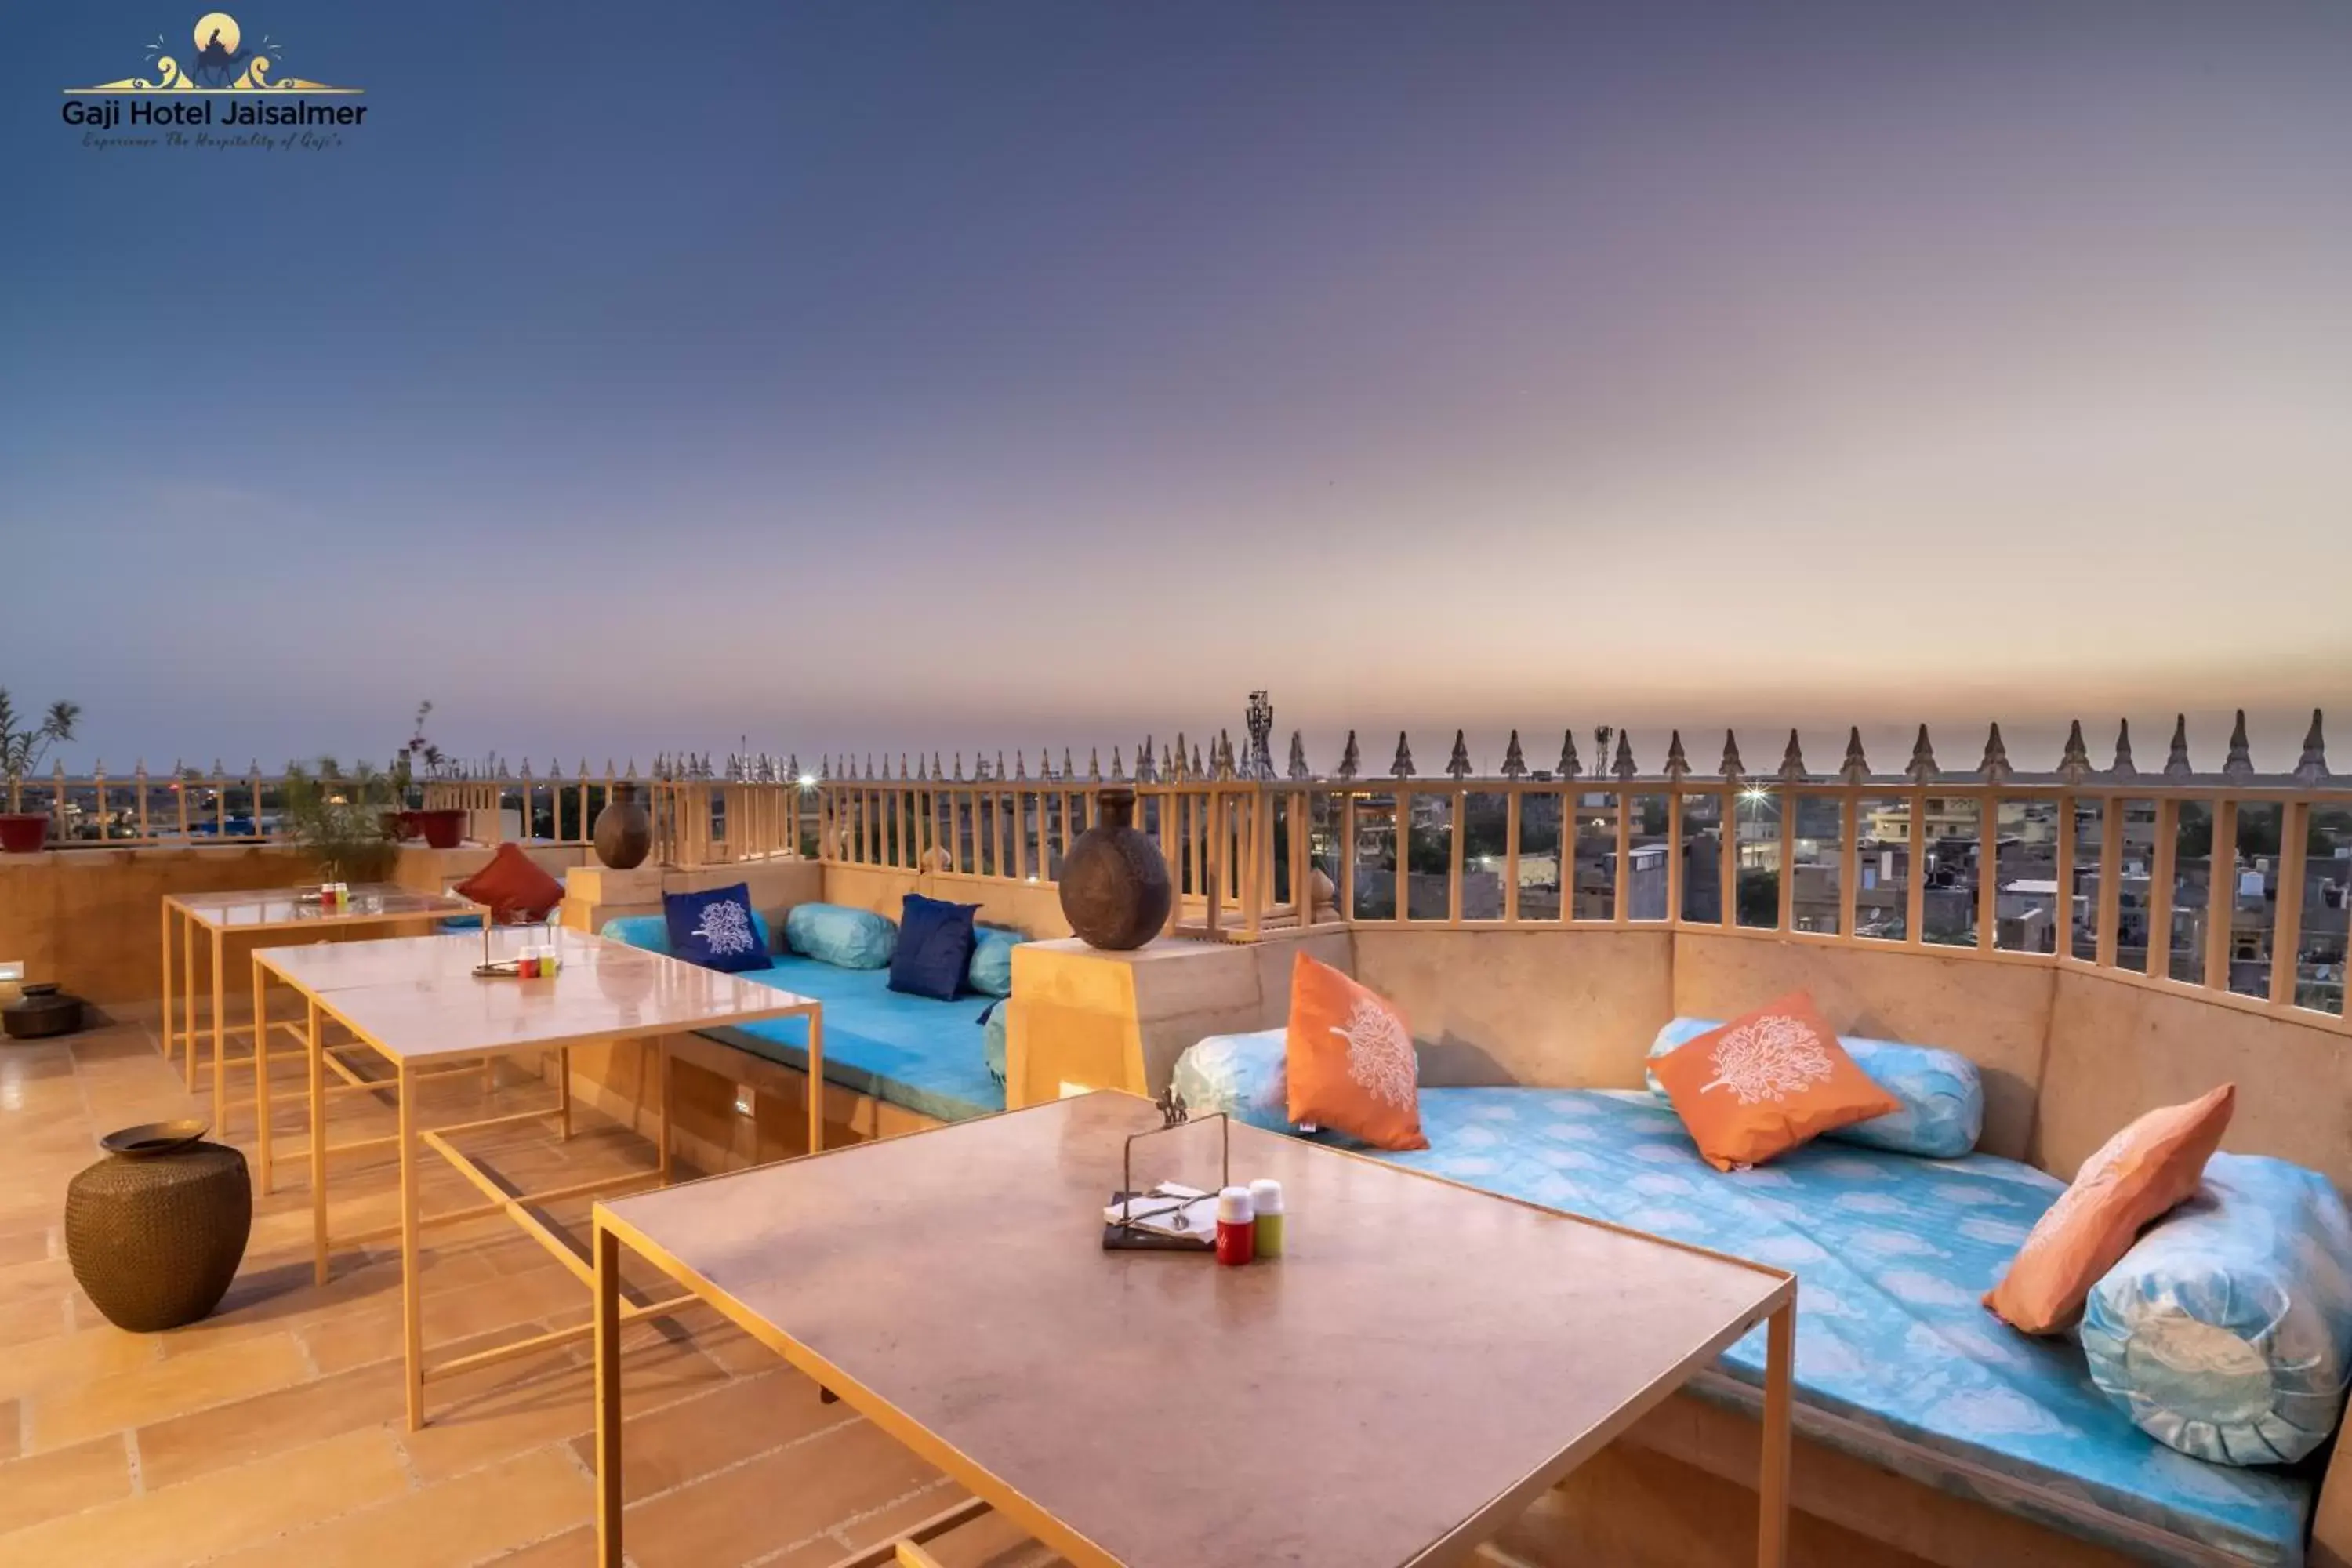 Restaurant/places to eat in Gaji Hotel Jaisalmer